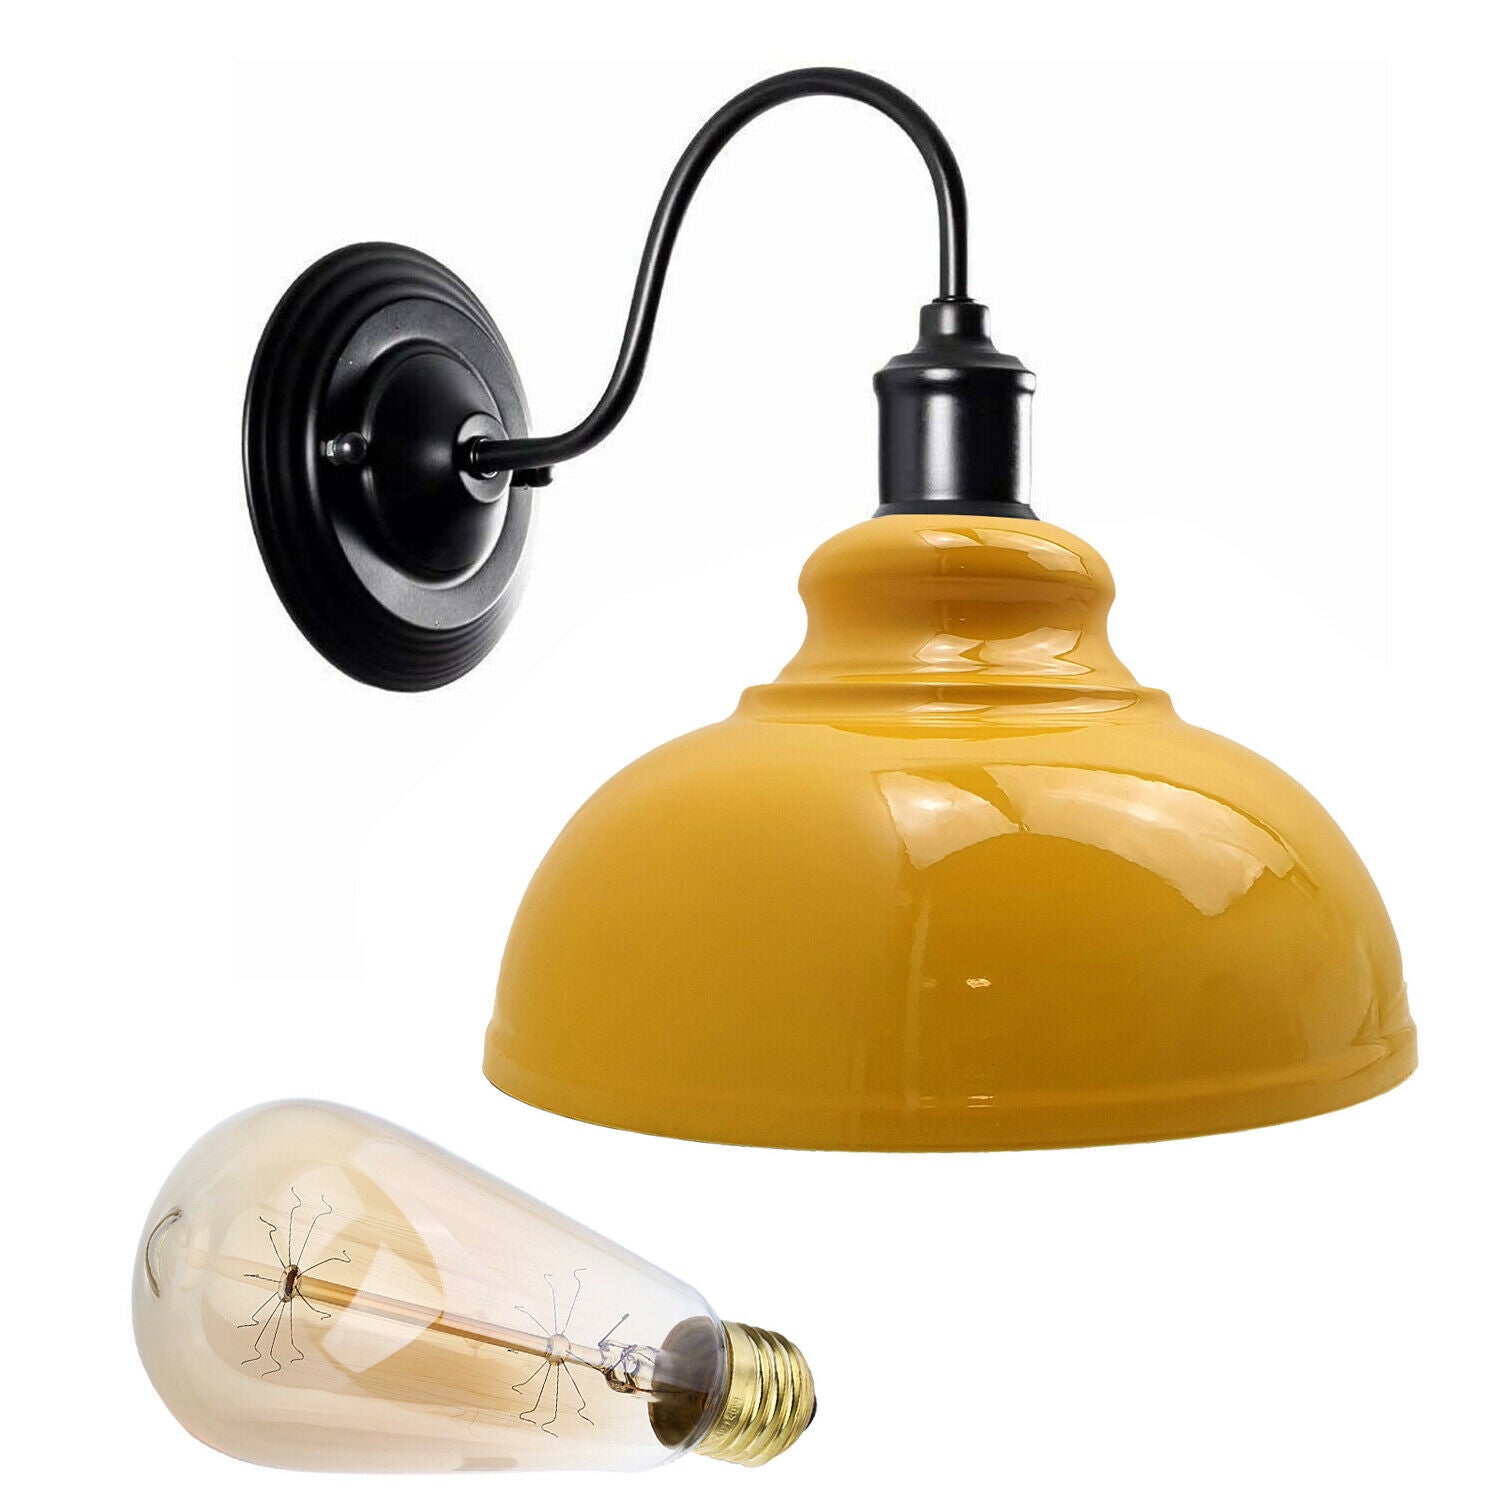 Vintage Industrial Wall Mounted Light Multi colour Sconce Lamp Fixture Wall Lamp~2060 - LEDSone UK Ltd